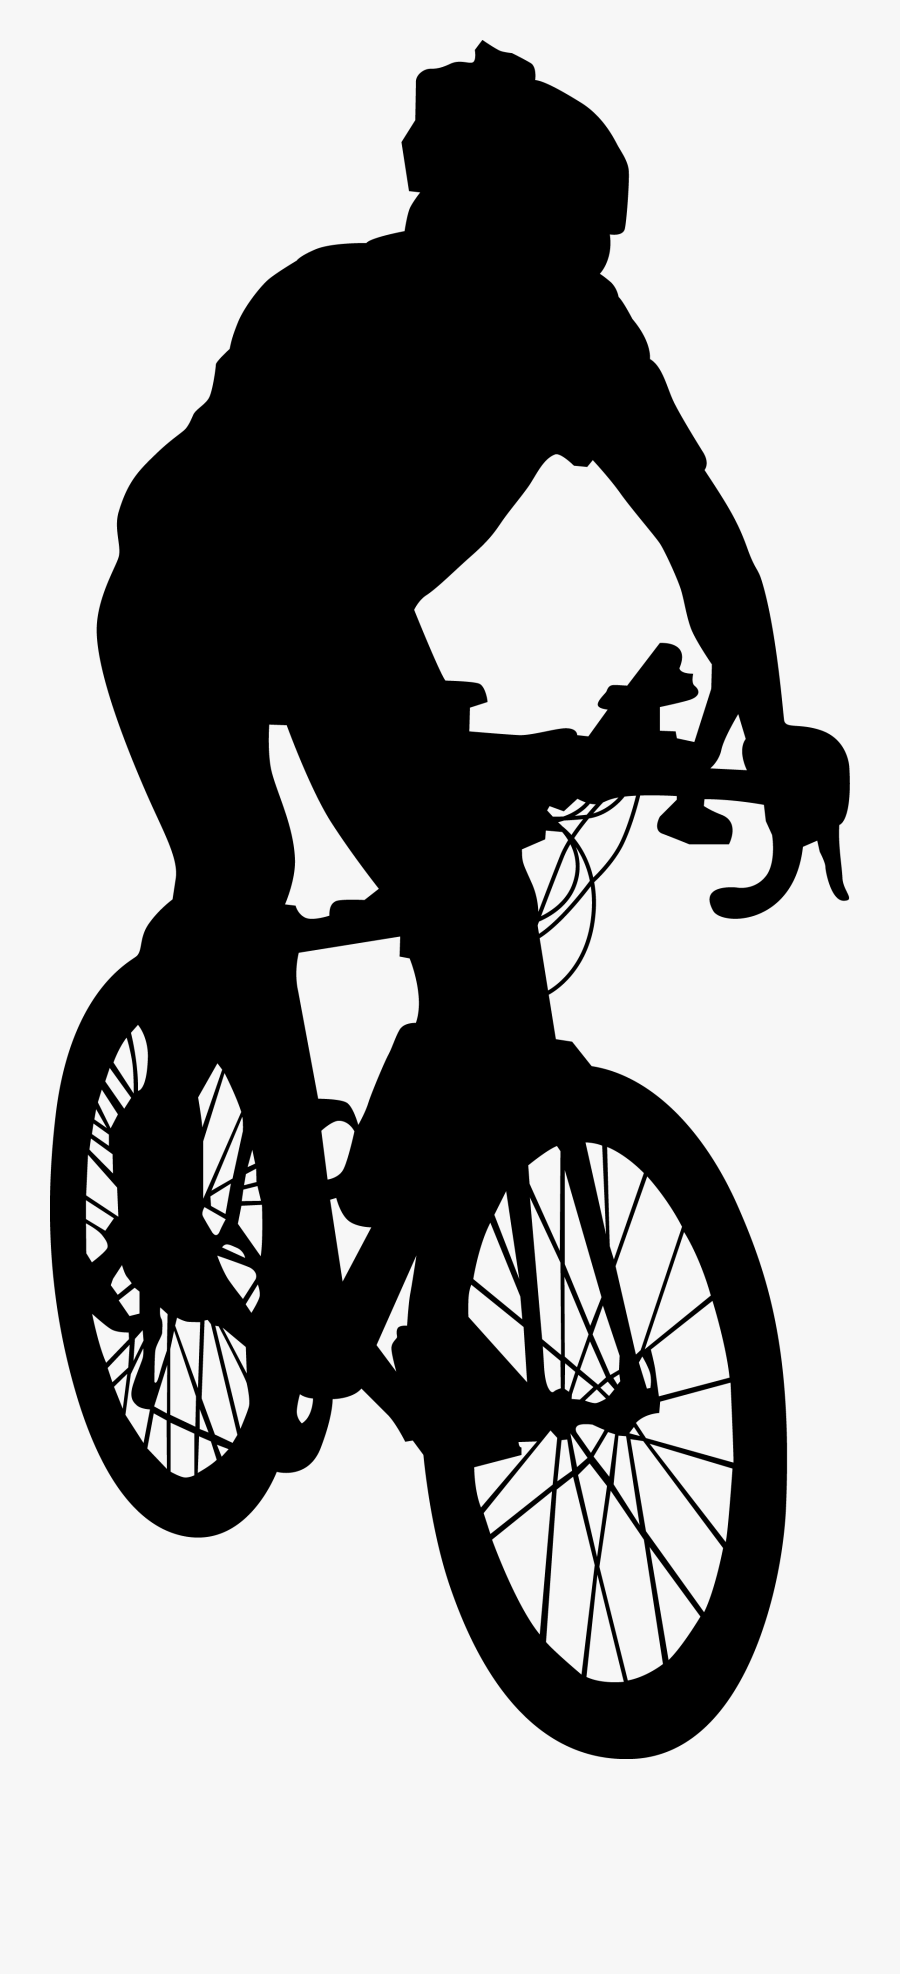 Biker Silhouette Png - Silhouette Riding Bike Png, Transparent Clipart